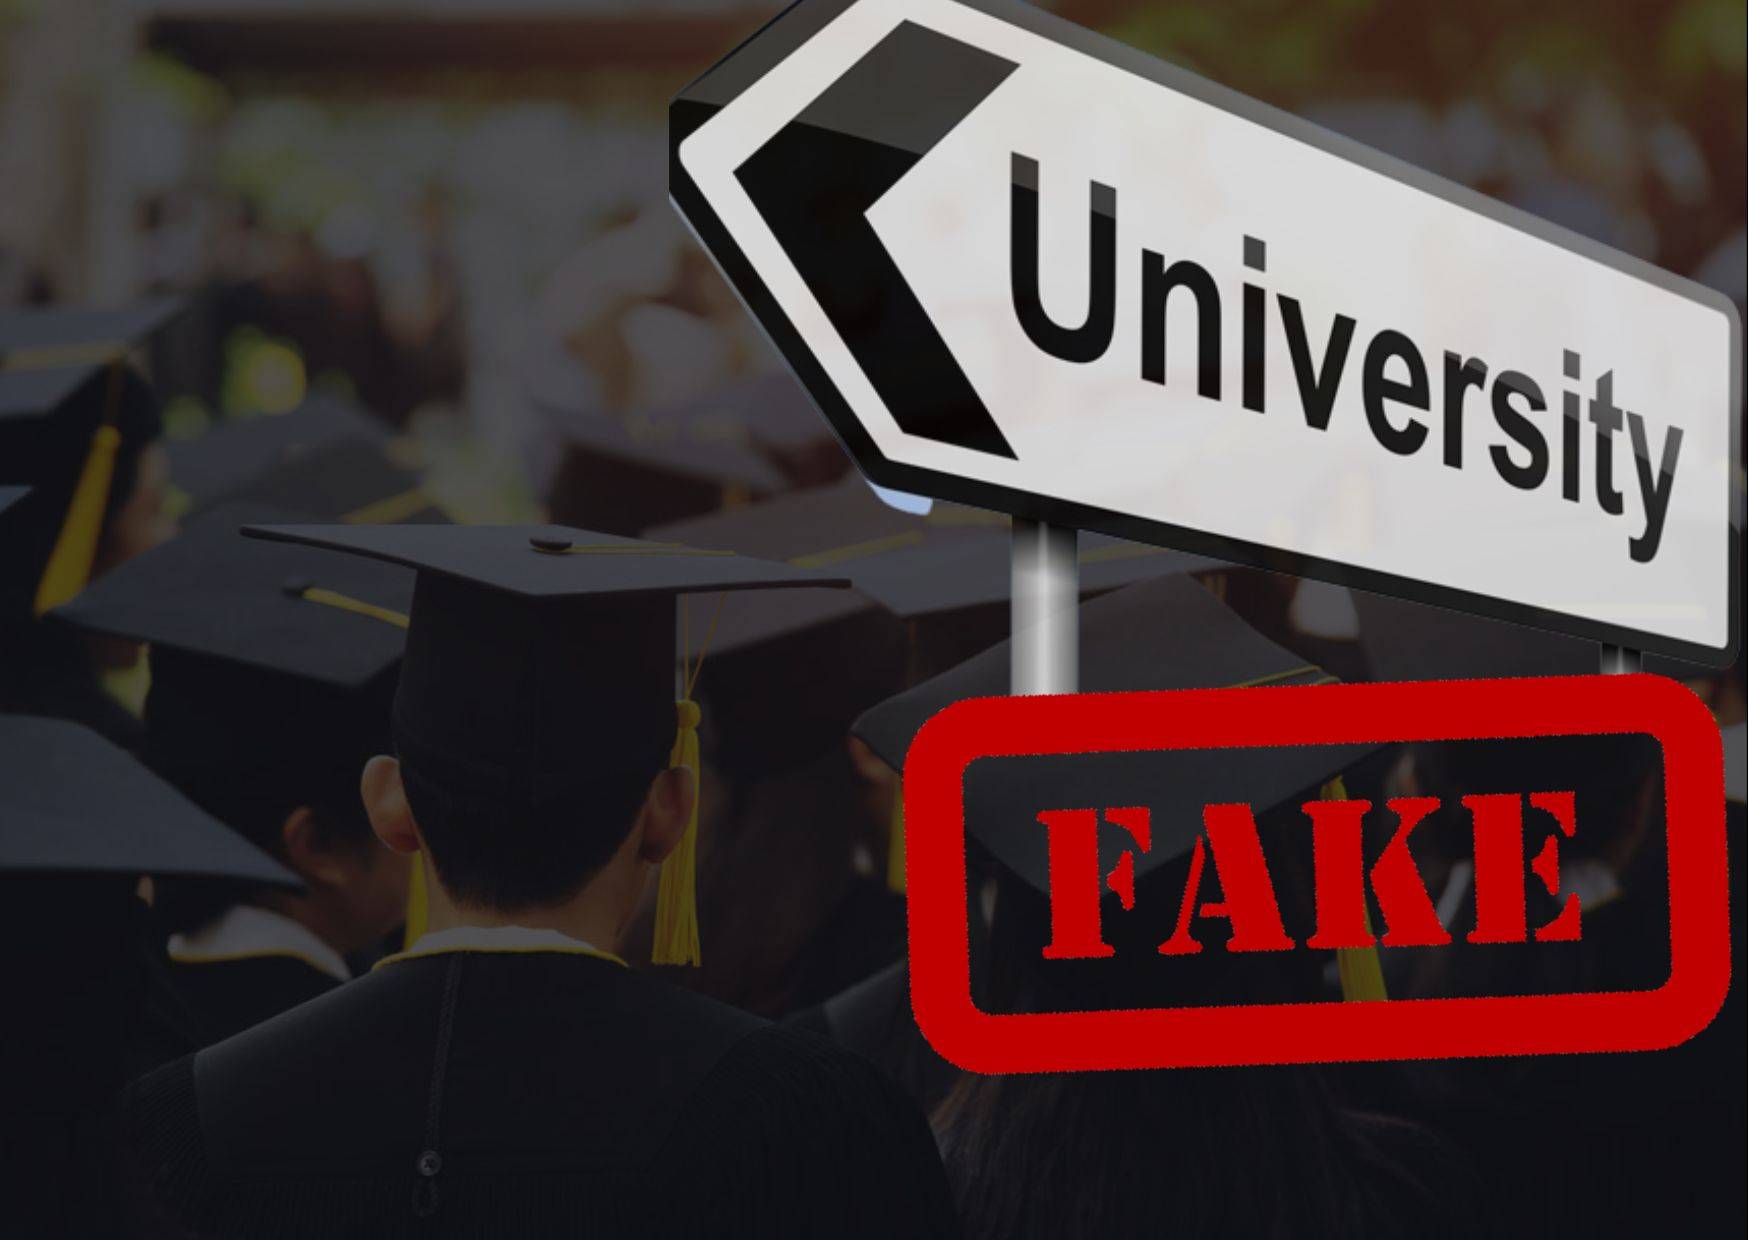 Two Odisha universities among 21 declared fake by UGC